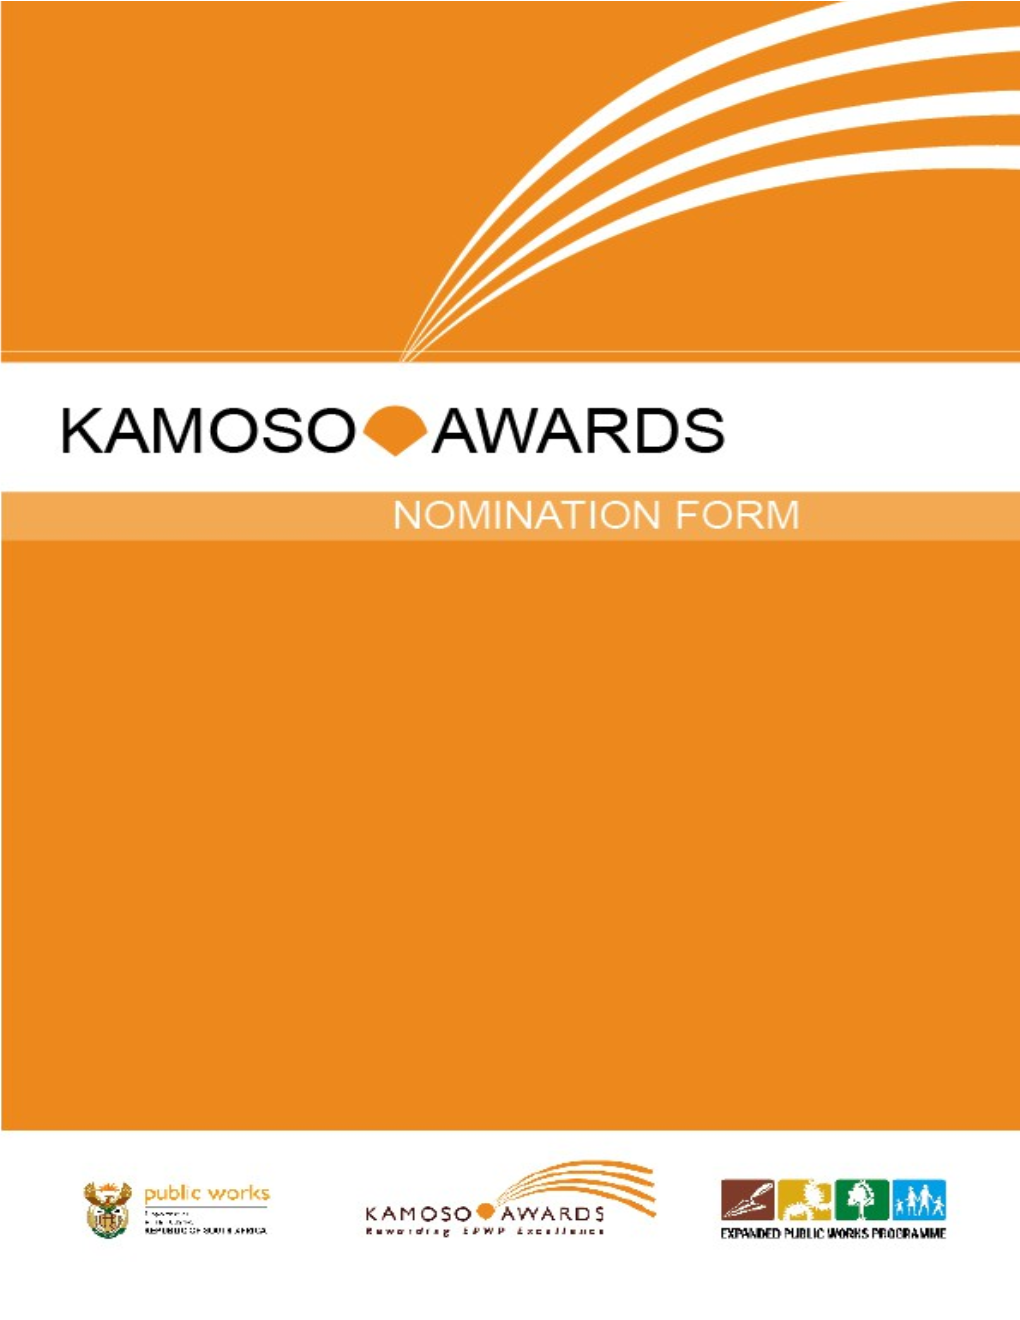 Kamoso Awards 2014 Nomination / Application Form